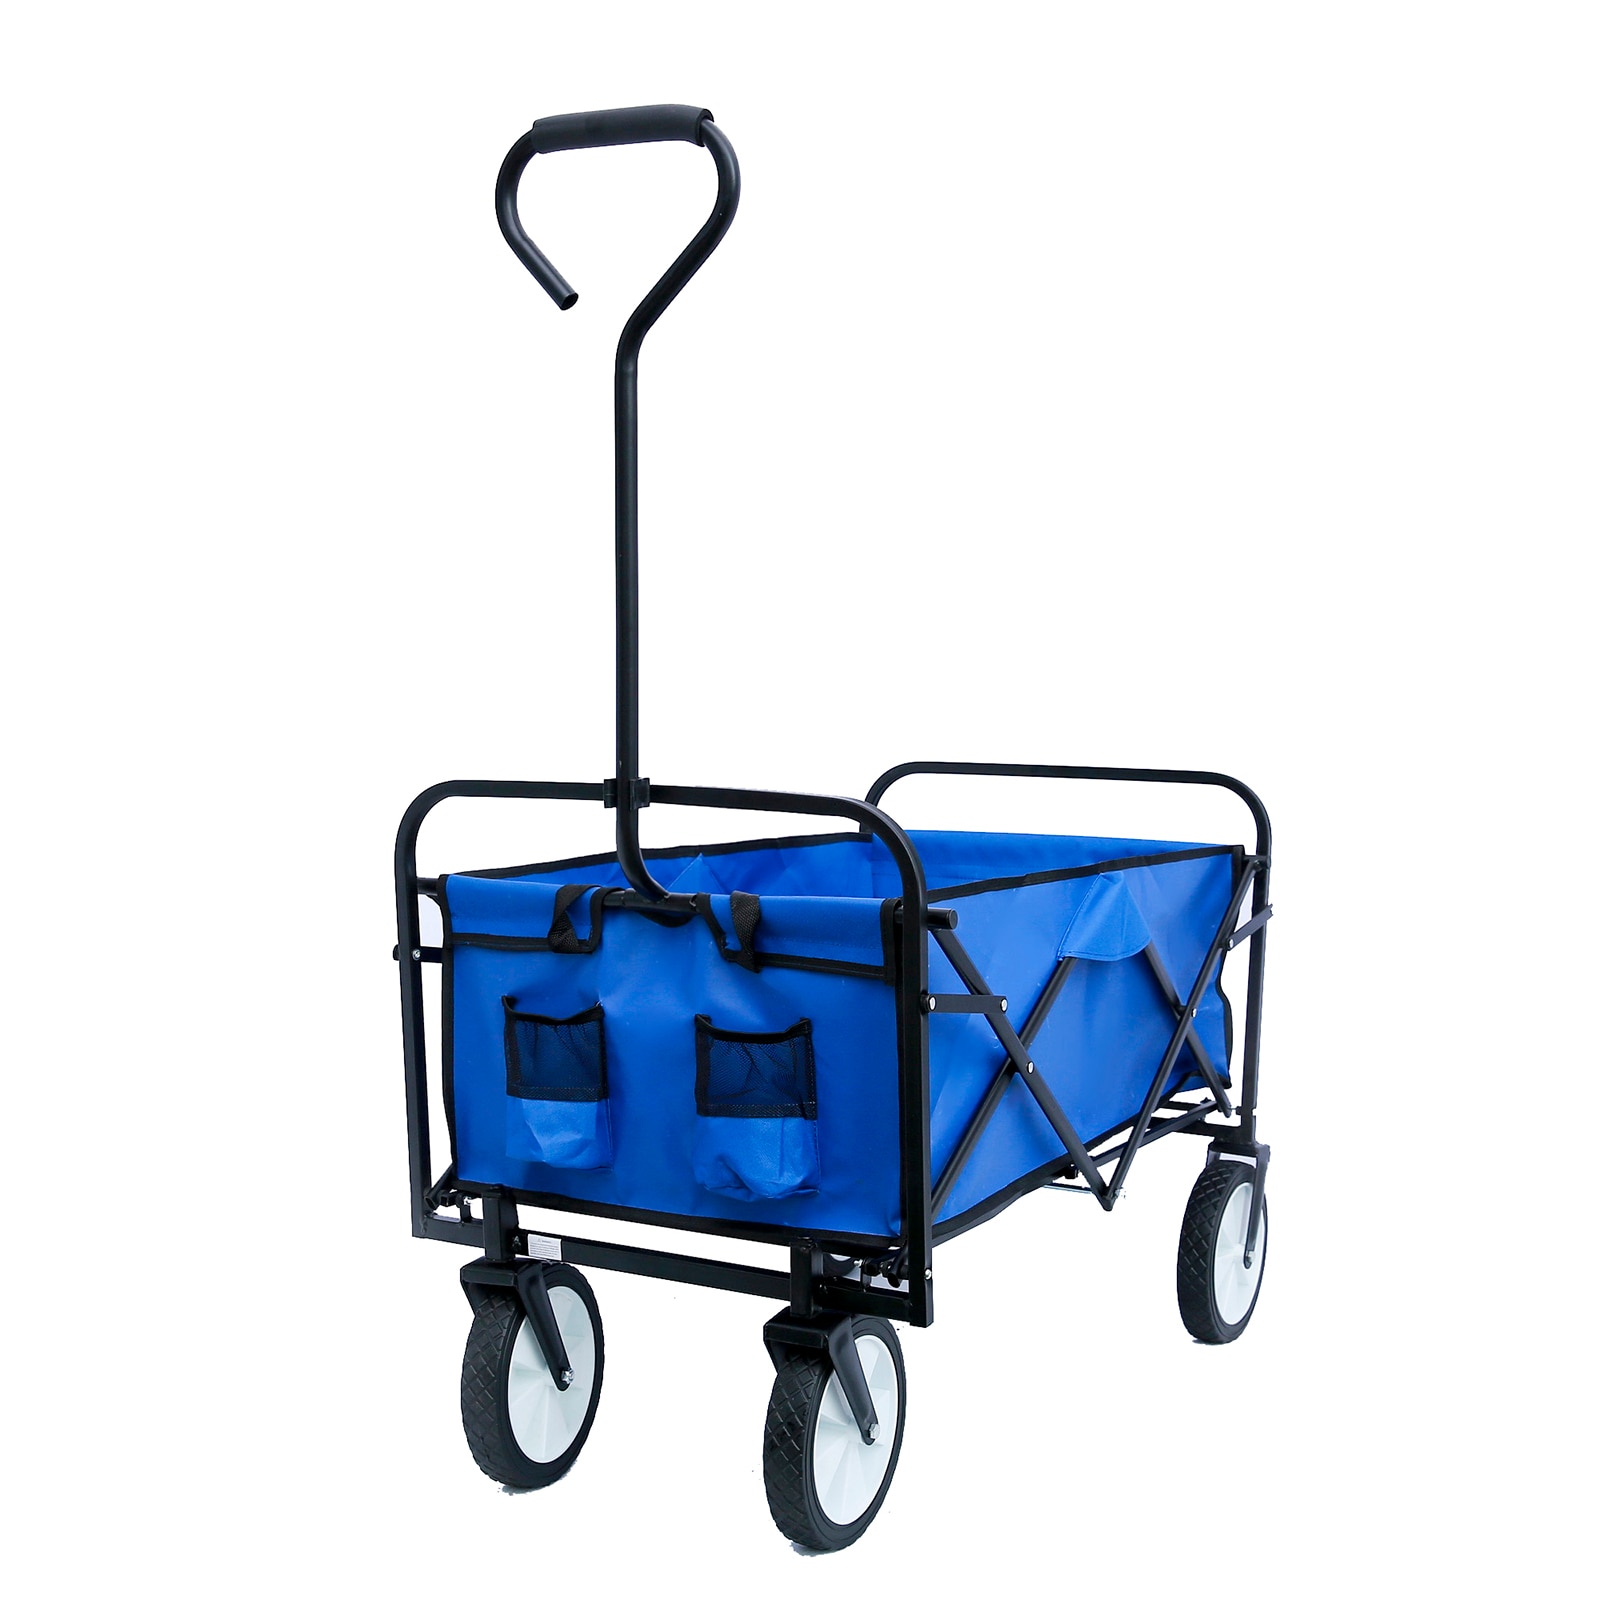 Folding Wagon Collapsible Outdoor Utility Wagon Heavy Duty Garden Portable Hand Cart Blue